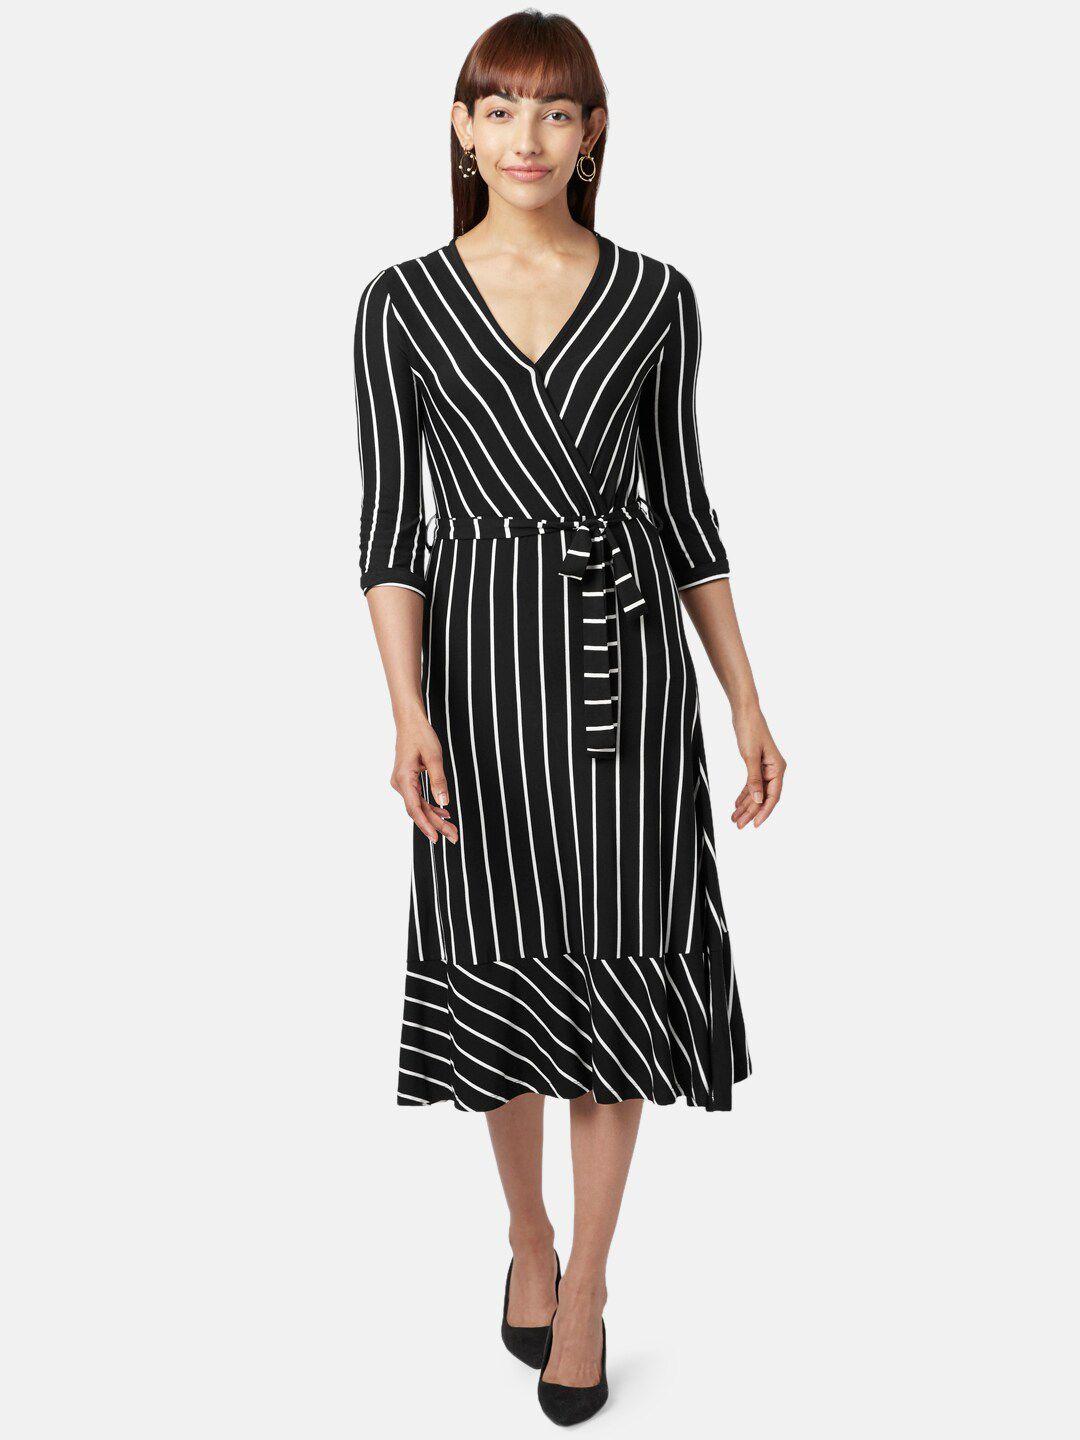 annabelle by pantaloons black striped midi dress